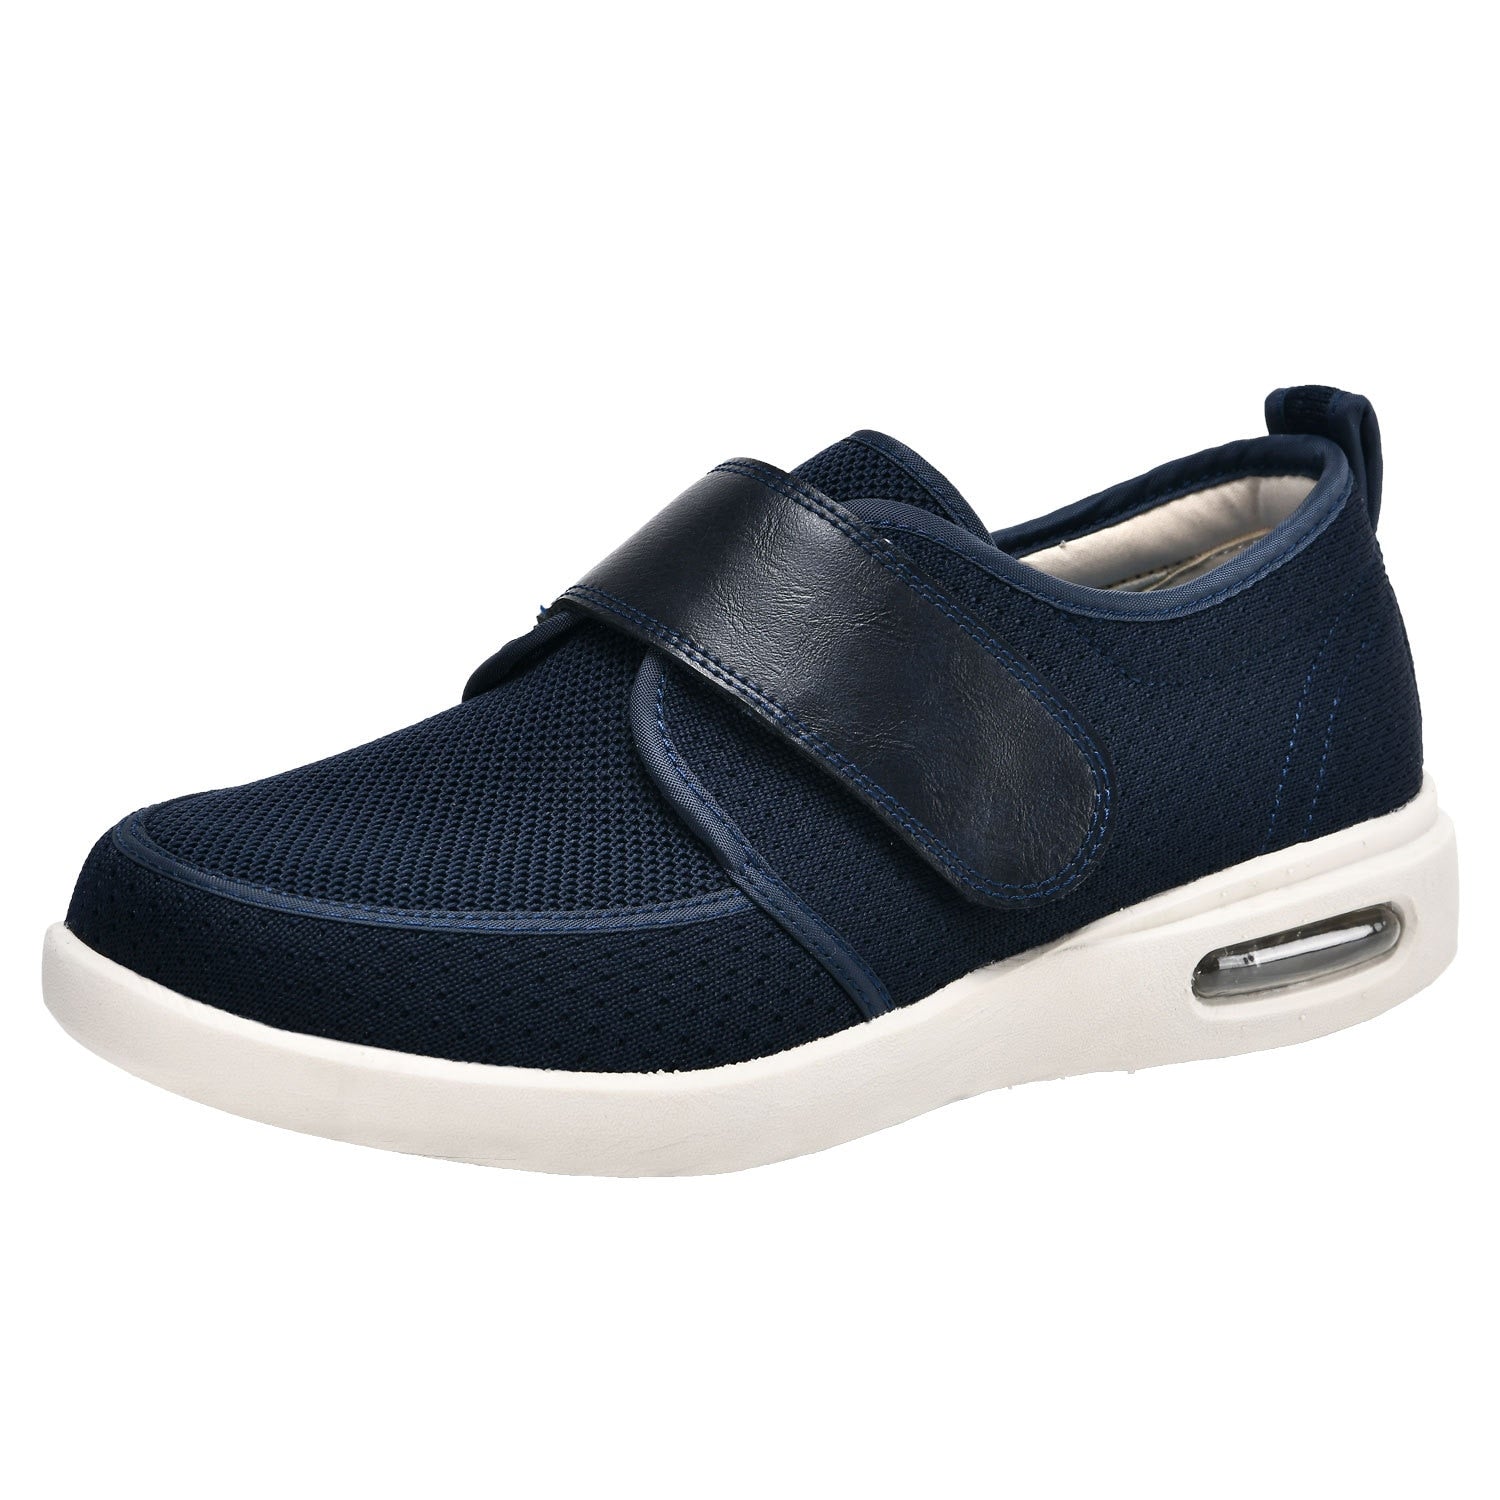 Men's Orthotic Shoes – ComfortWear